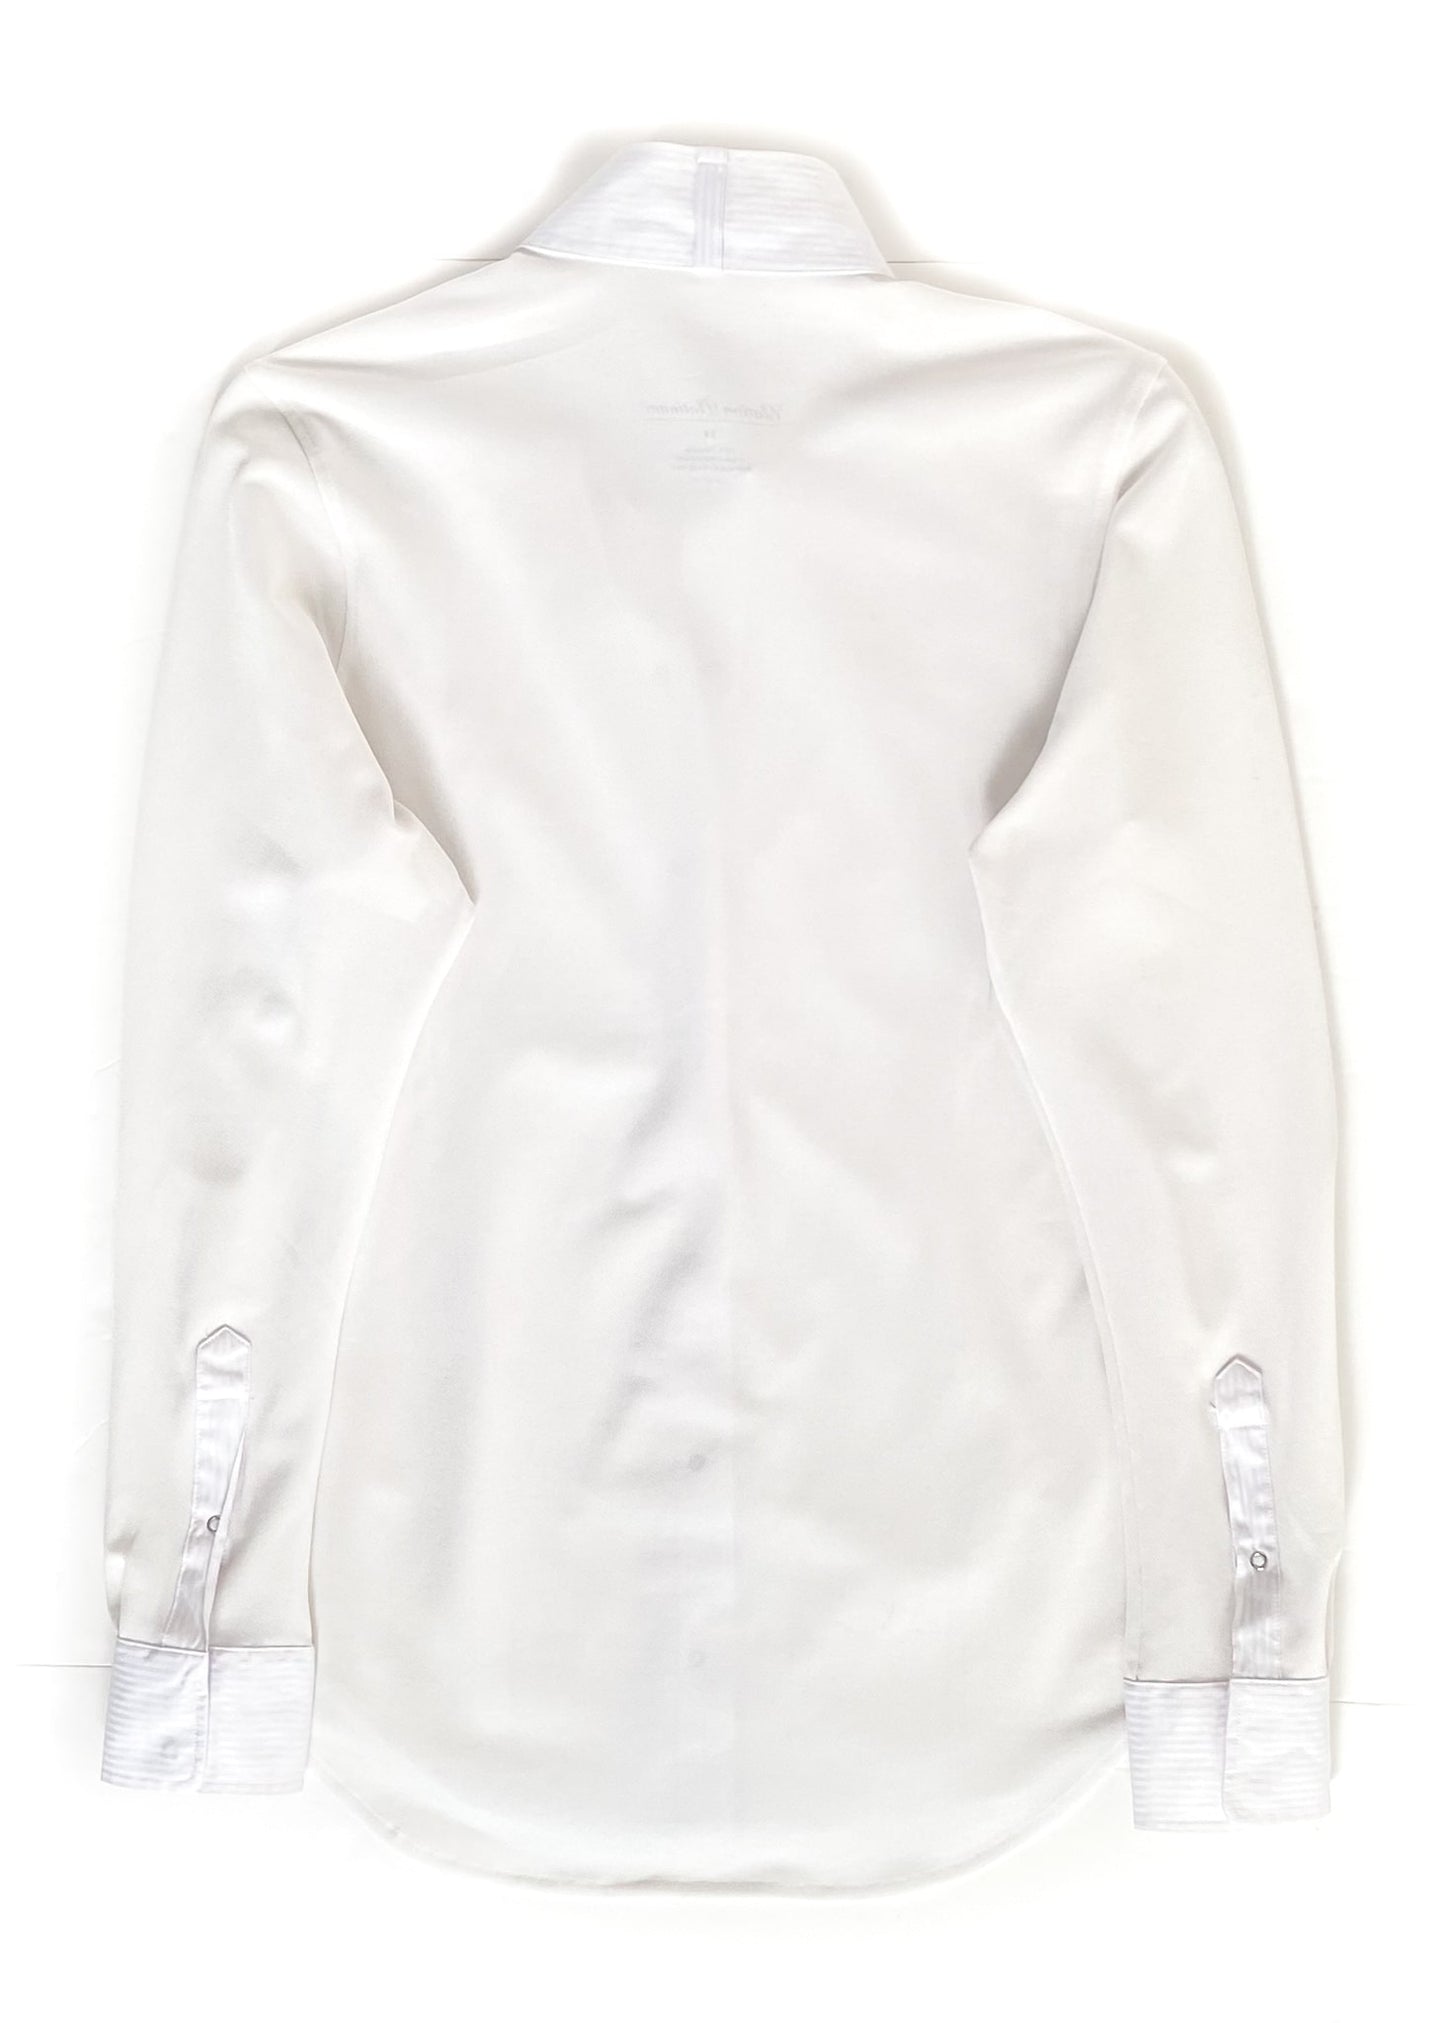 Elation Platinum Long Sleeve Competition Shirt - White - Women's 34